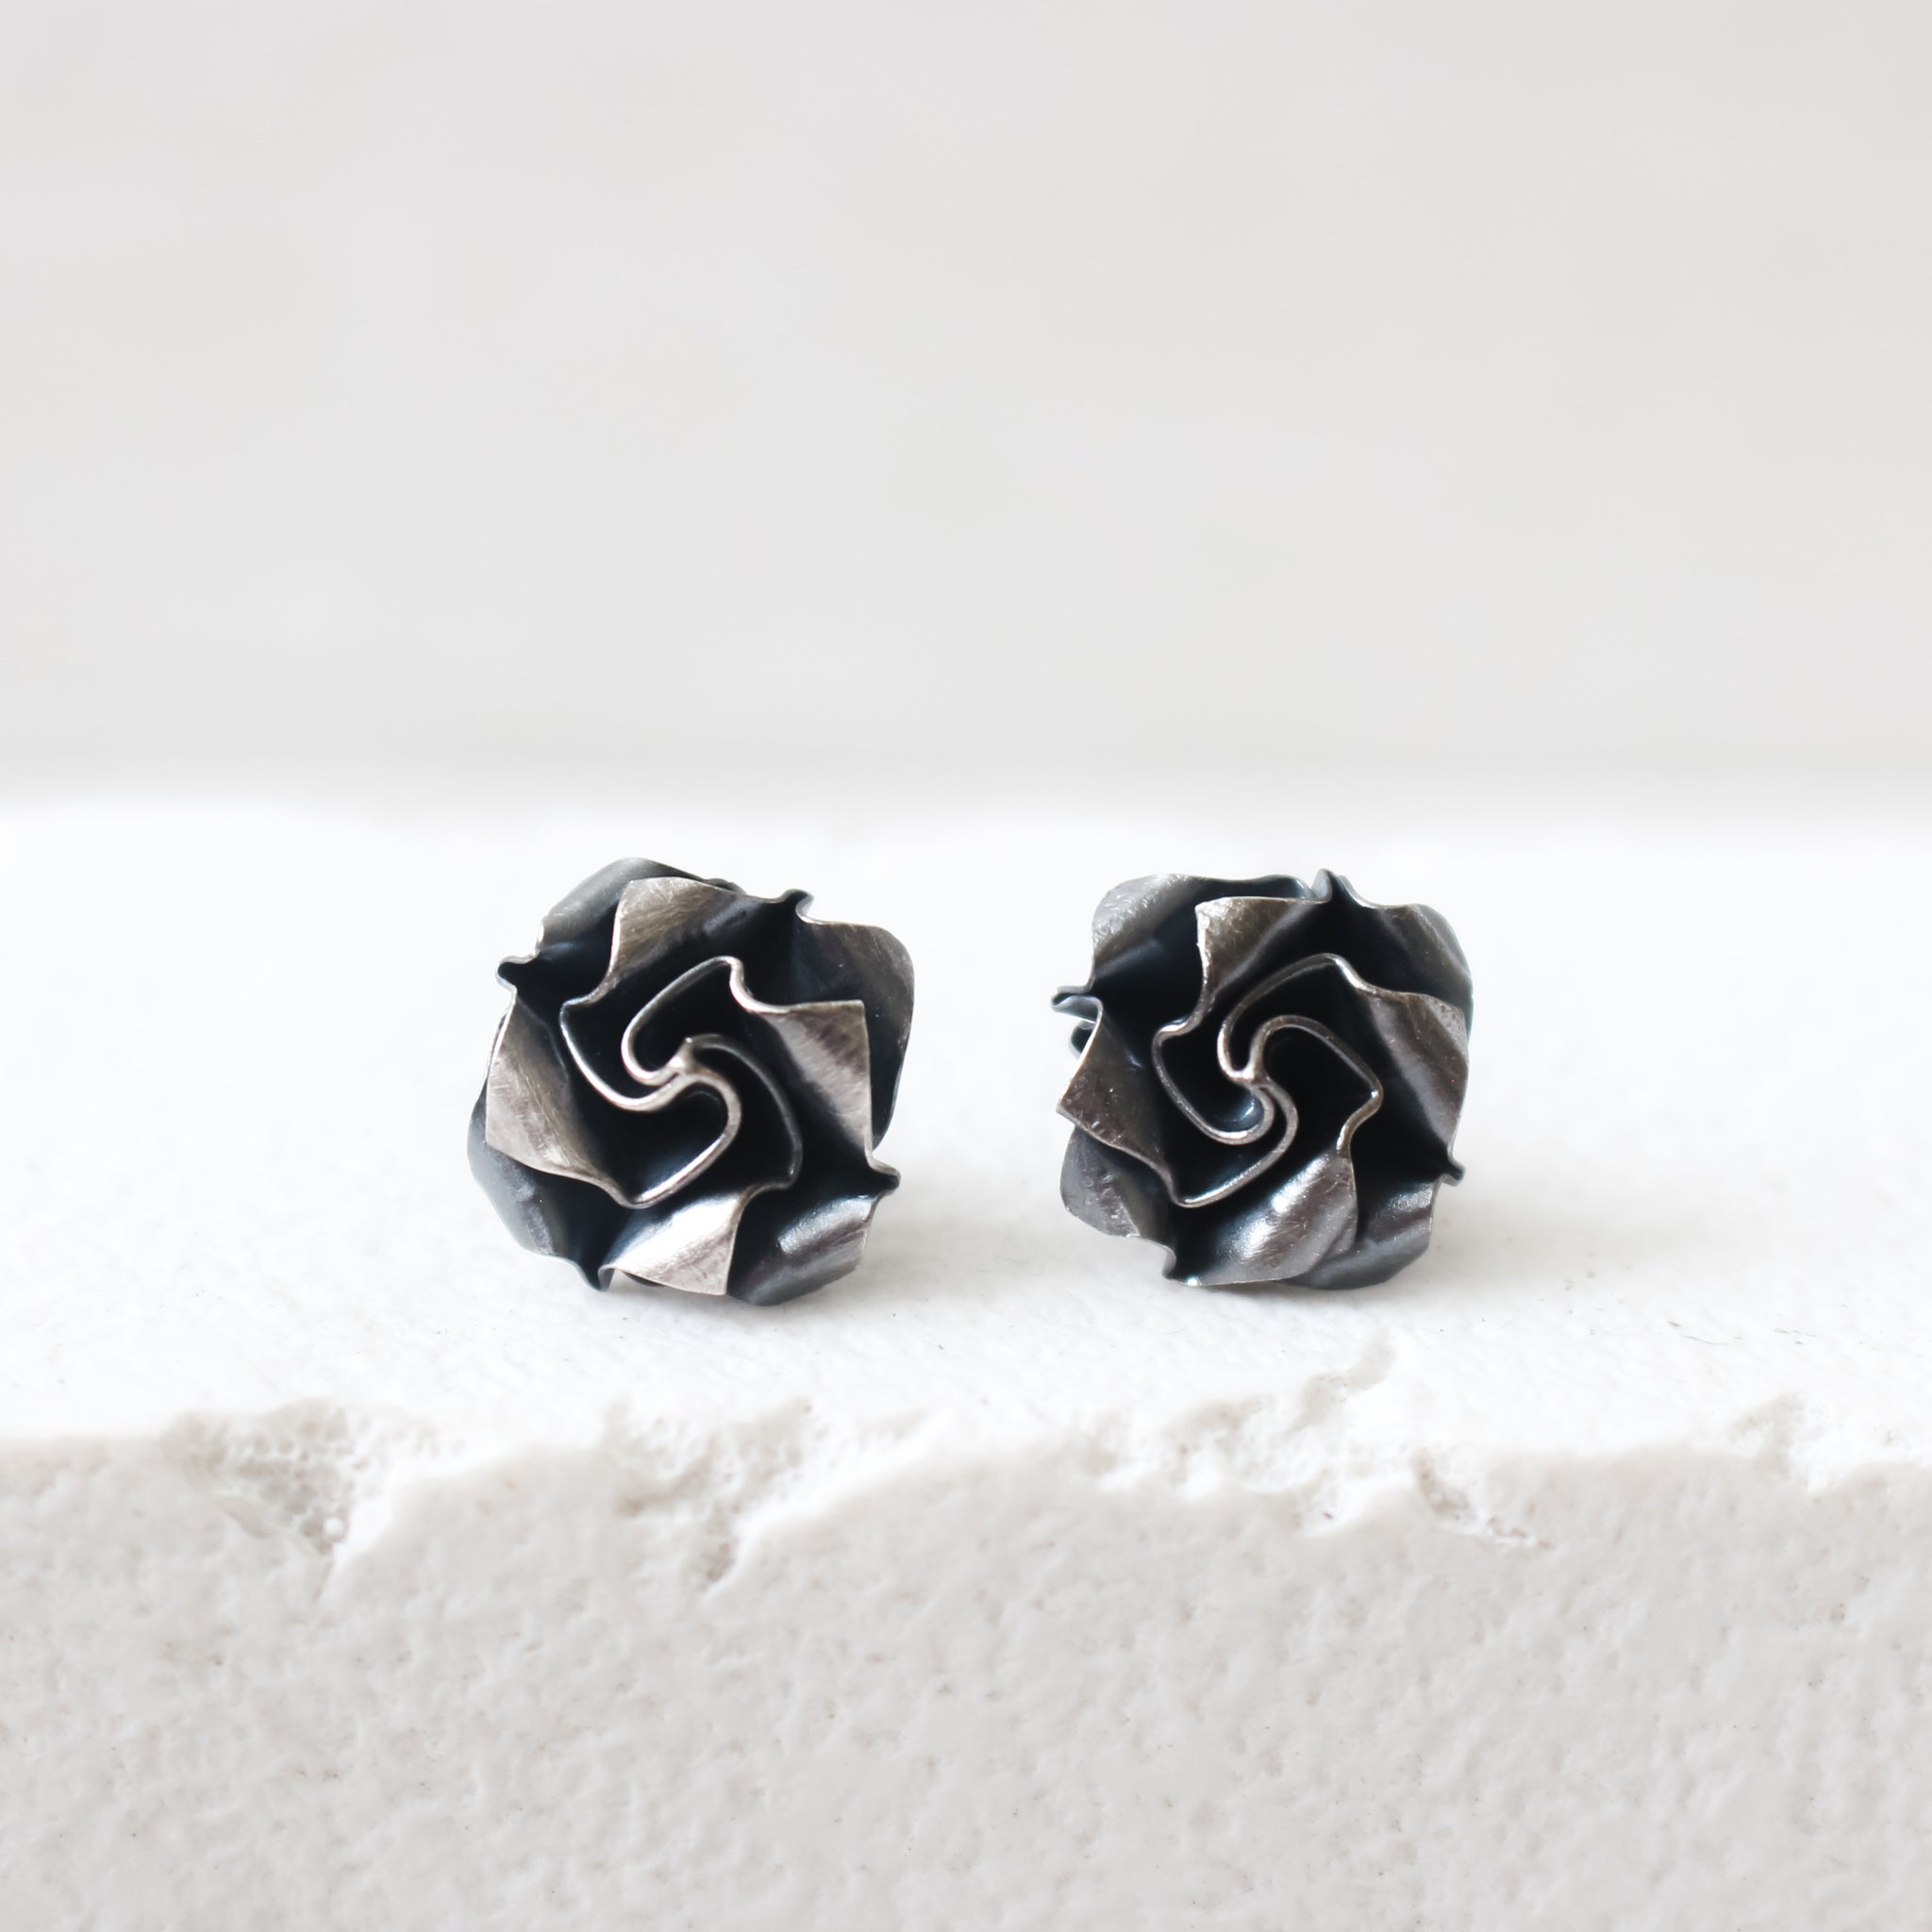 Black Origami Rose Earrings / Paper Rose Stud / Black Rose Earrings